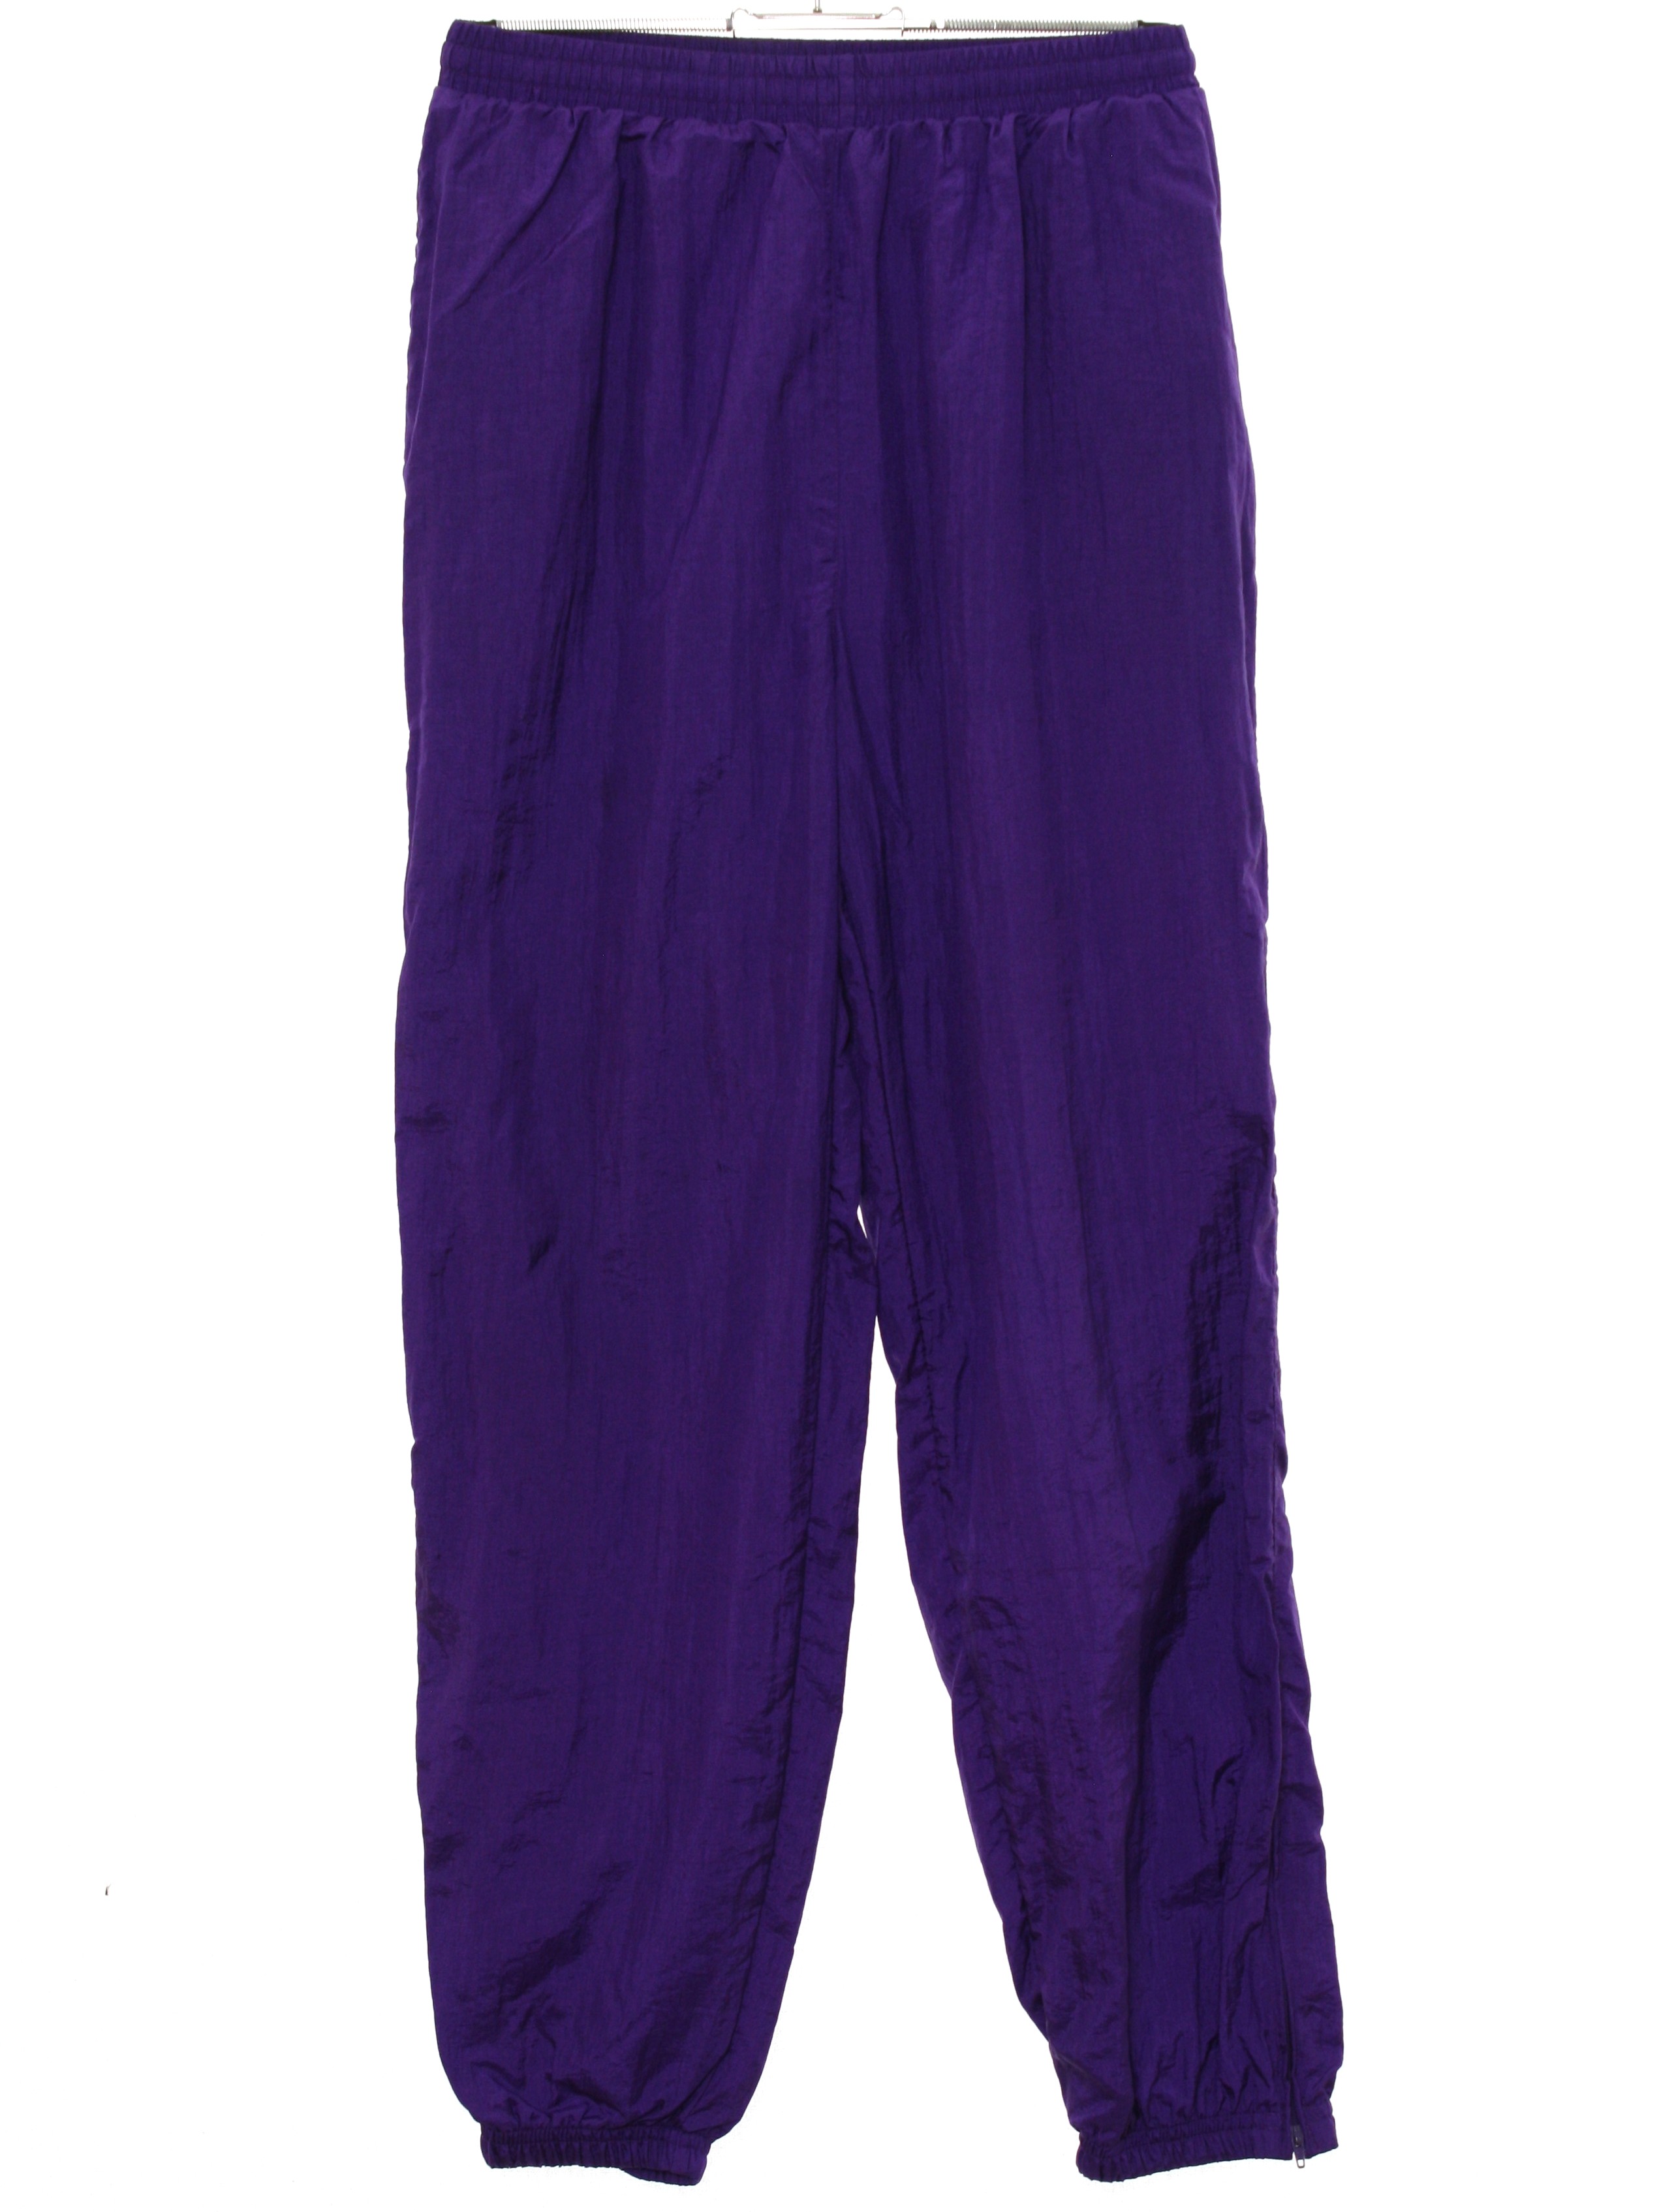 90s Retro Pants: 90s -Care Label- Womens dark purple solid colored ...